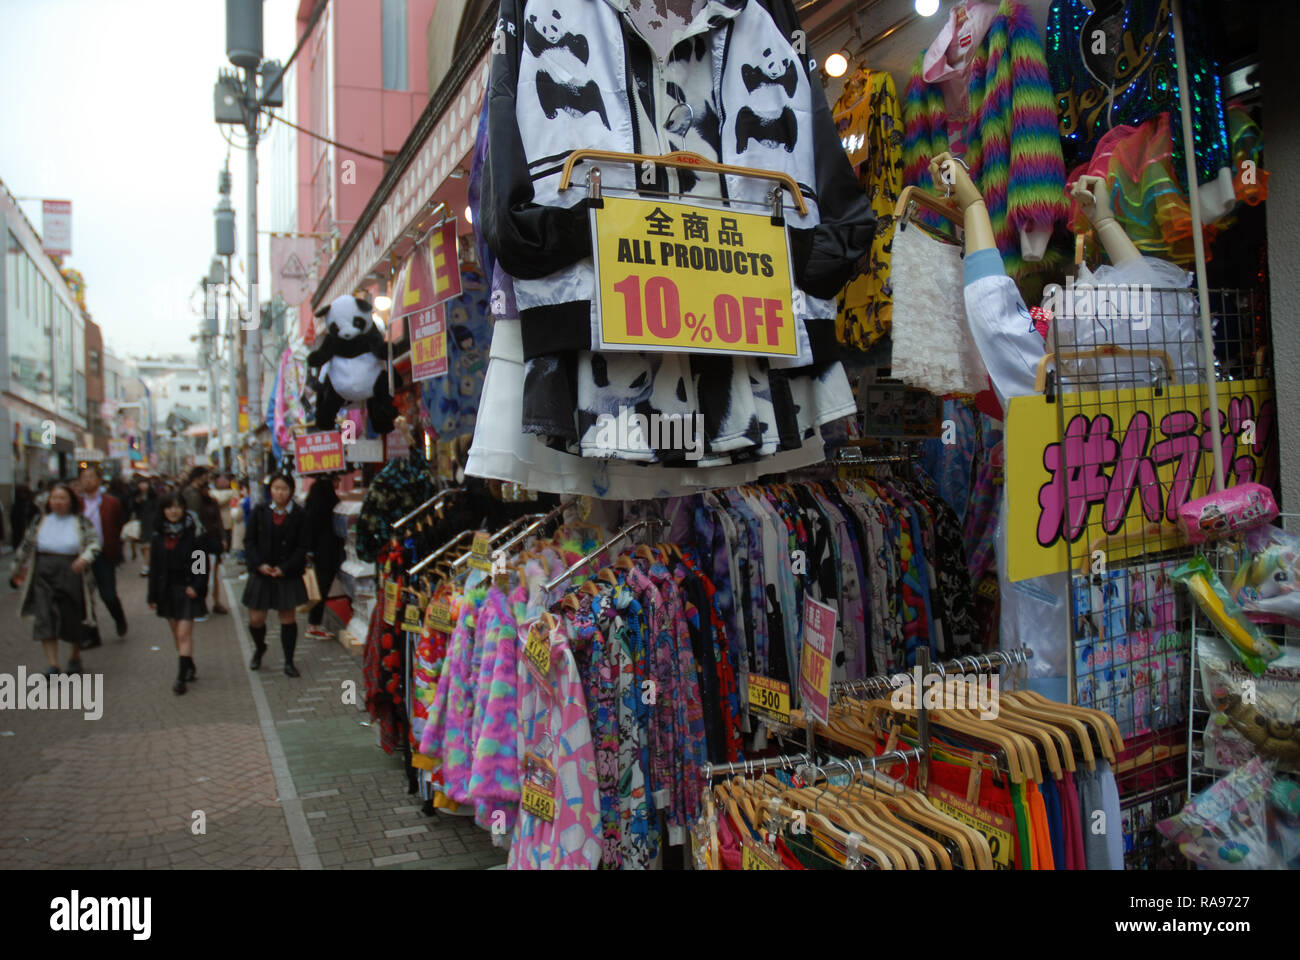 Shoppers in Takeshita street in Harajuku, Tokyo, Japan. Stock Photo